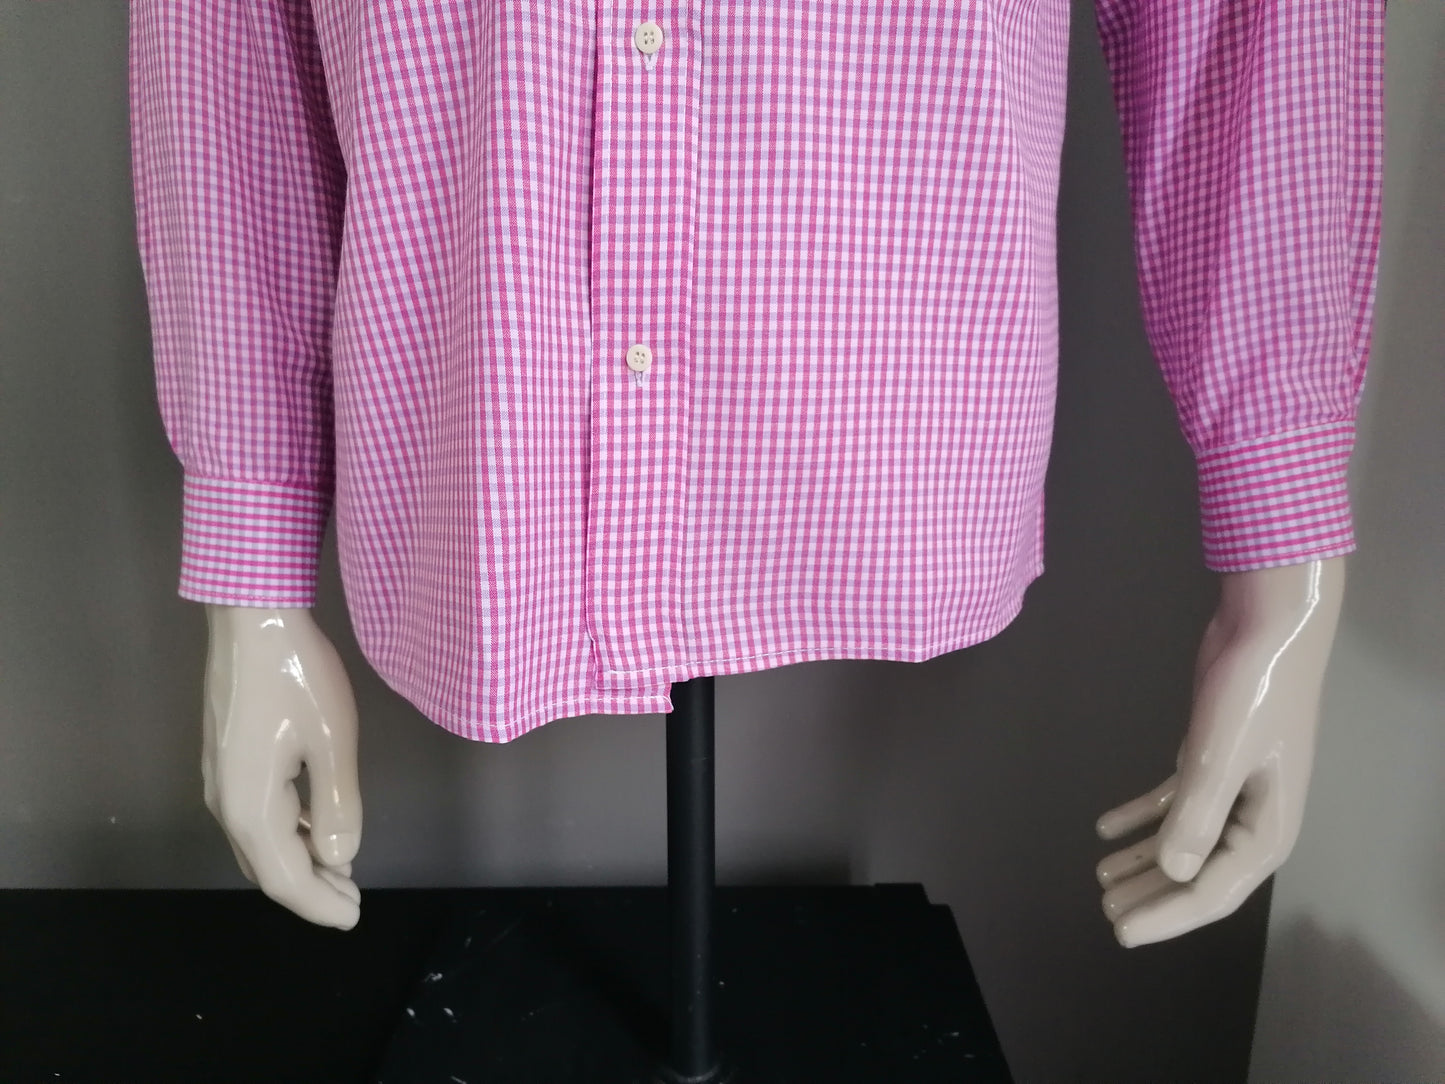 Vintage Systeme Nouveau Shirt. Blanco rosa a cuadros. Talla L.